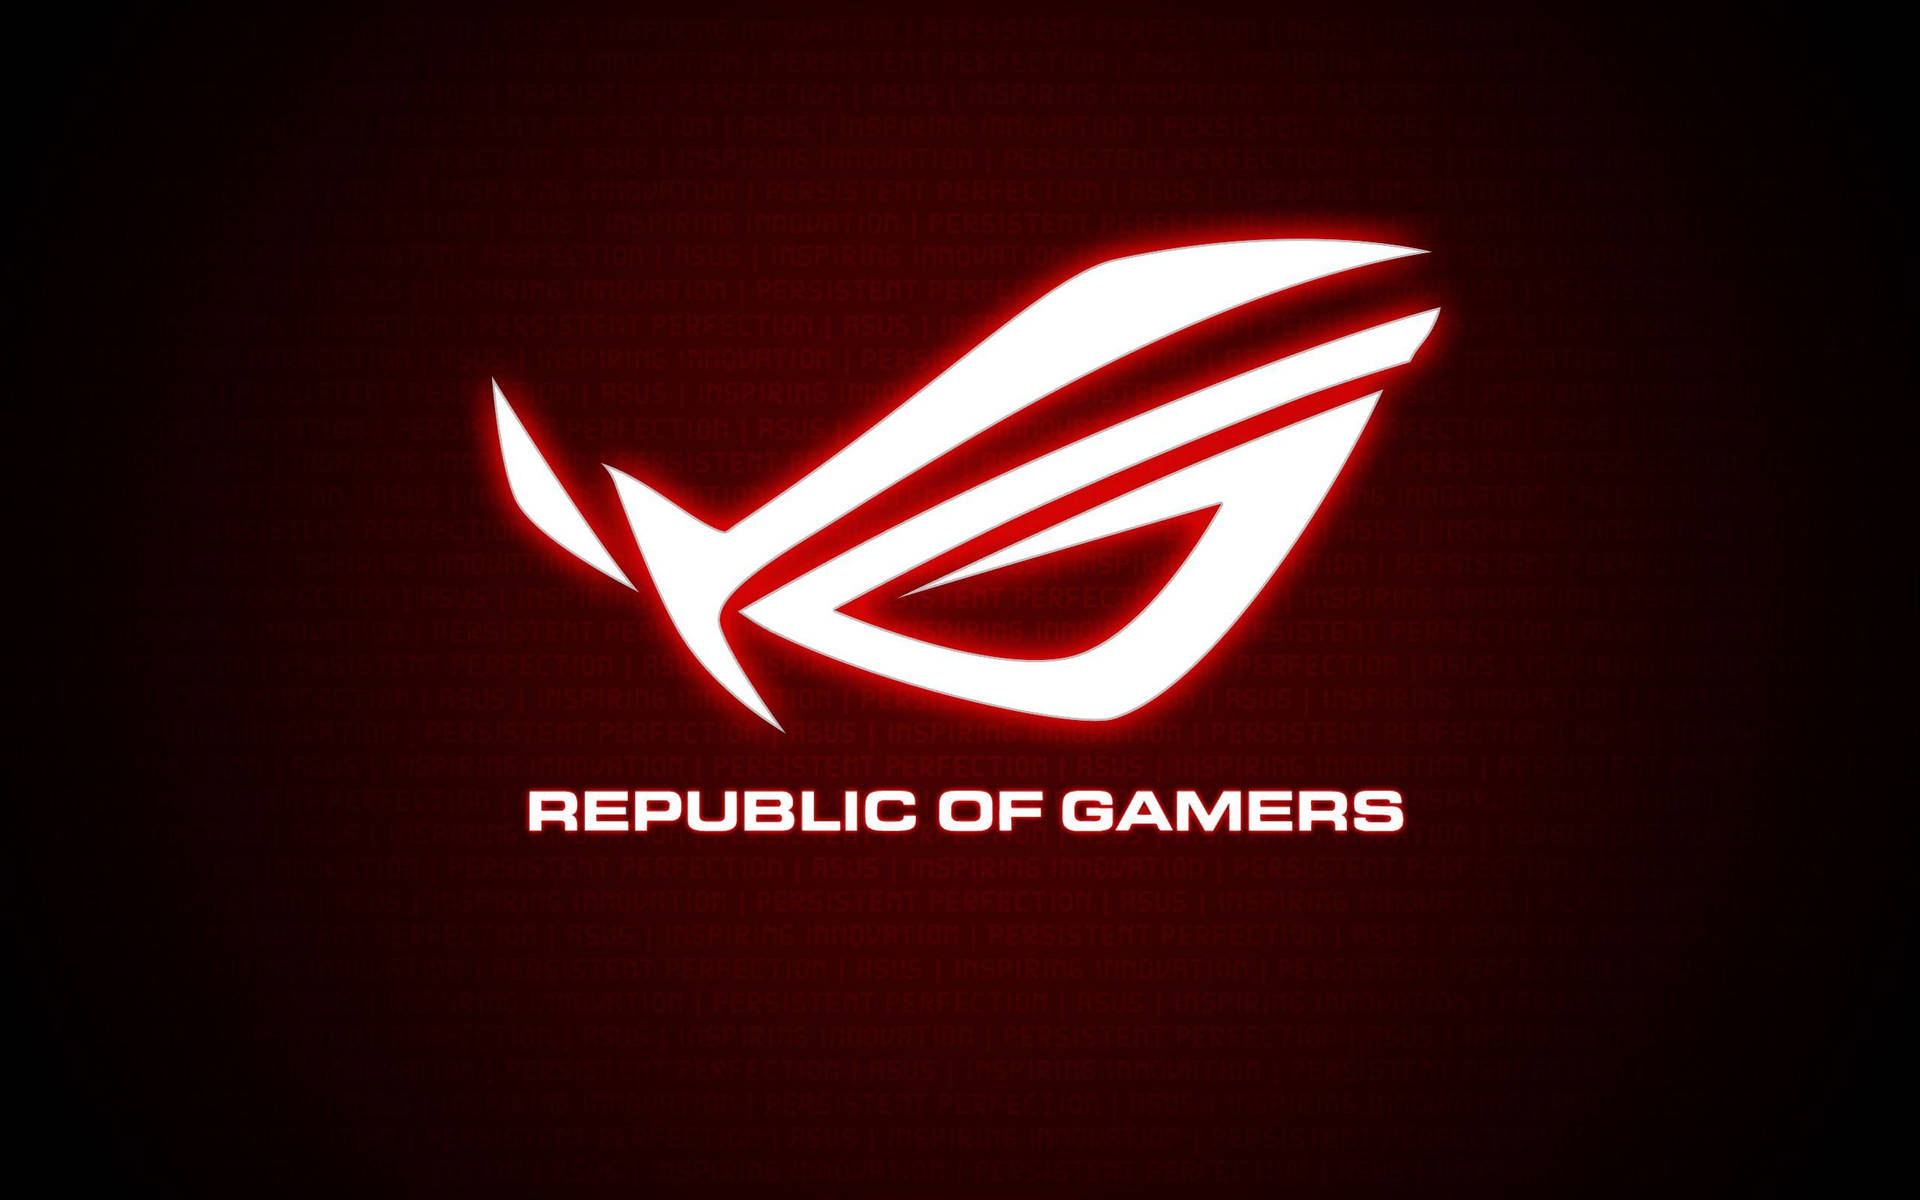 Download Garena Republic Of Gamers Logo Wallpaper | Wallpapers.com